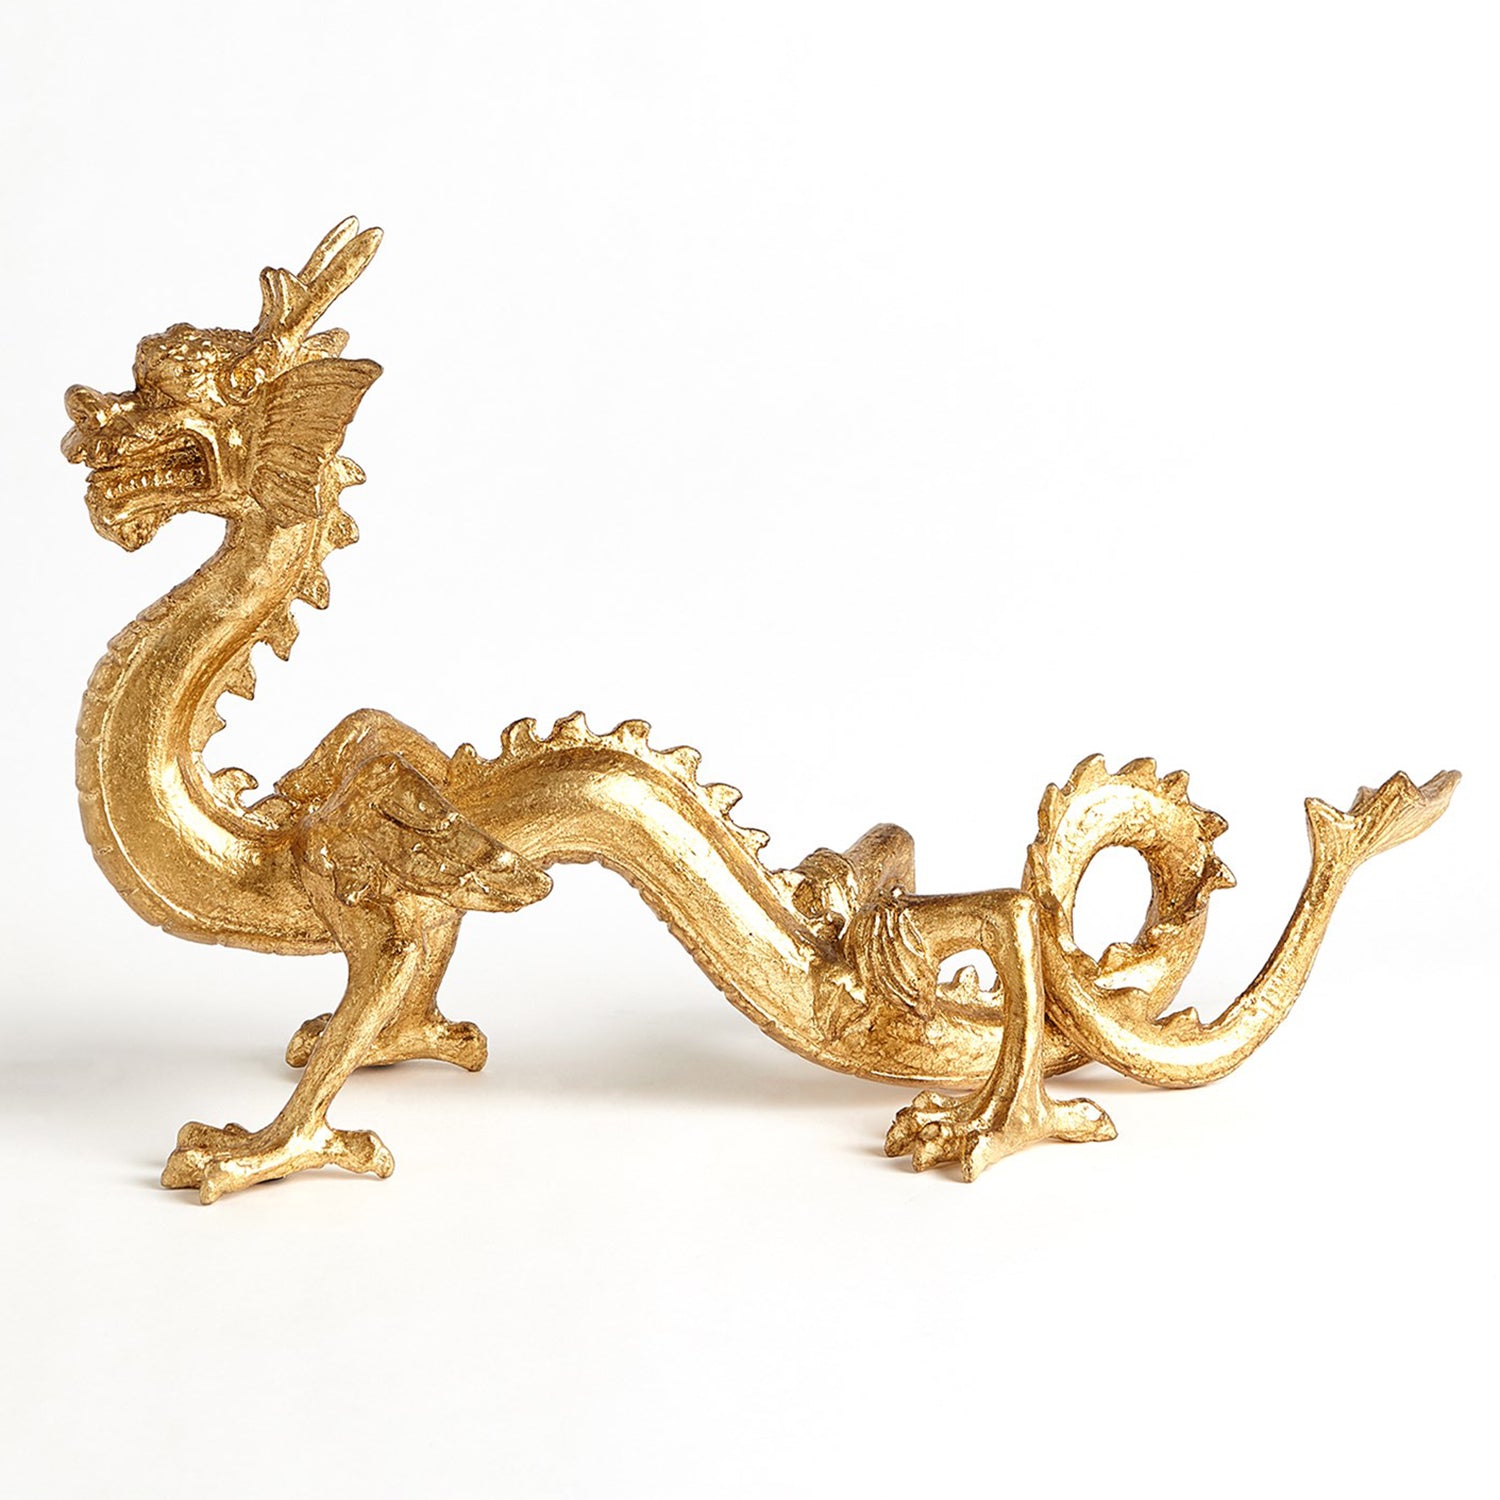 Global Views Standing Dragon Sculpture – Paynes Gray